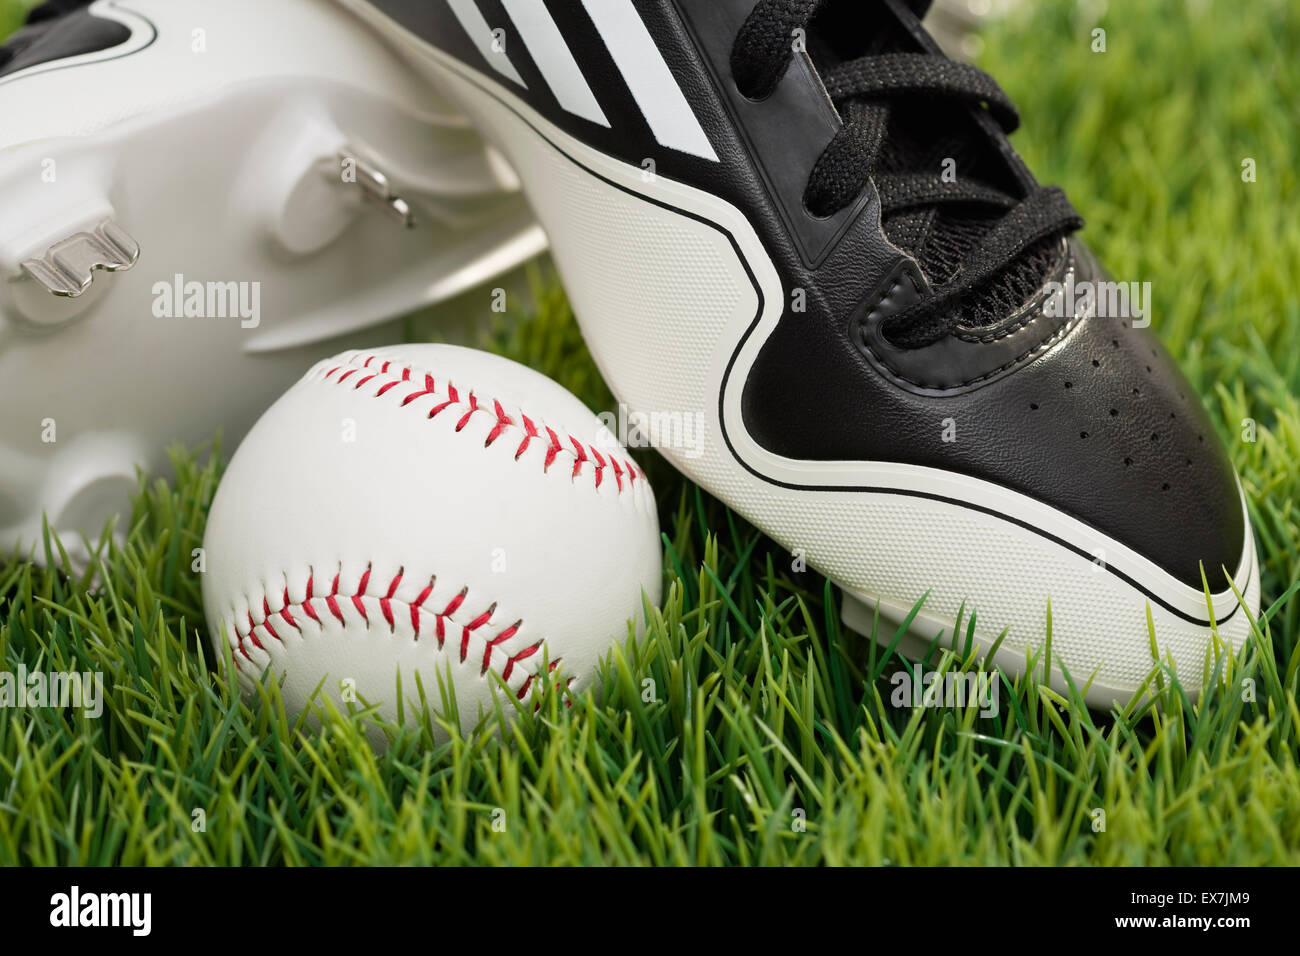 Baseball Schuhe und Ball auf Rasen Stockfotografie - Alamy